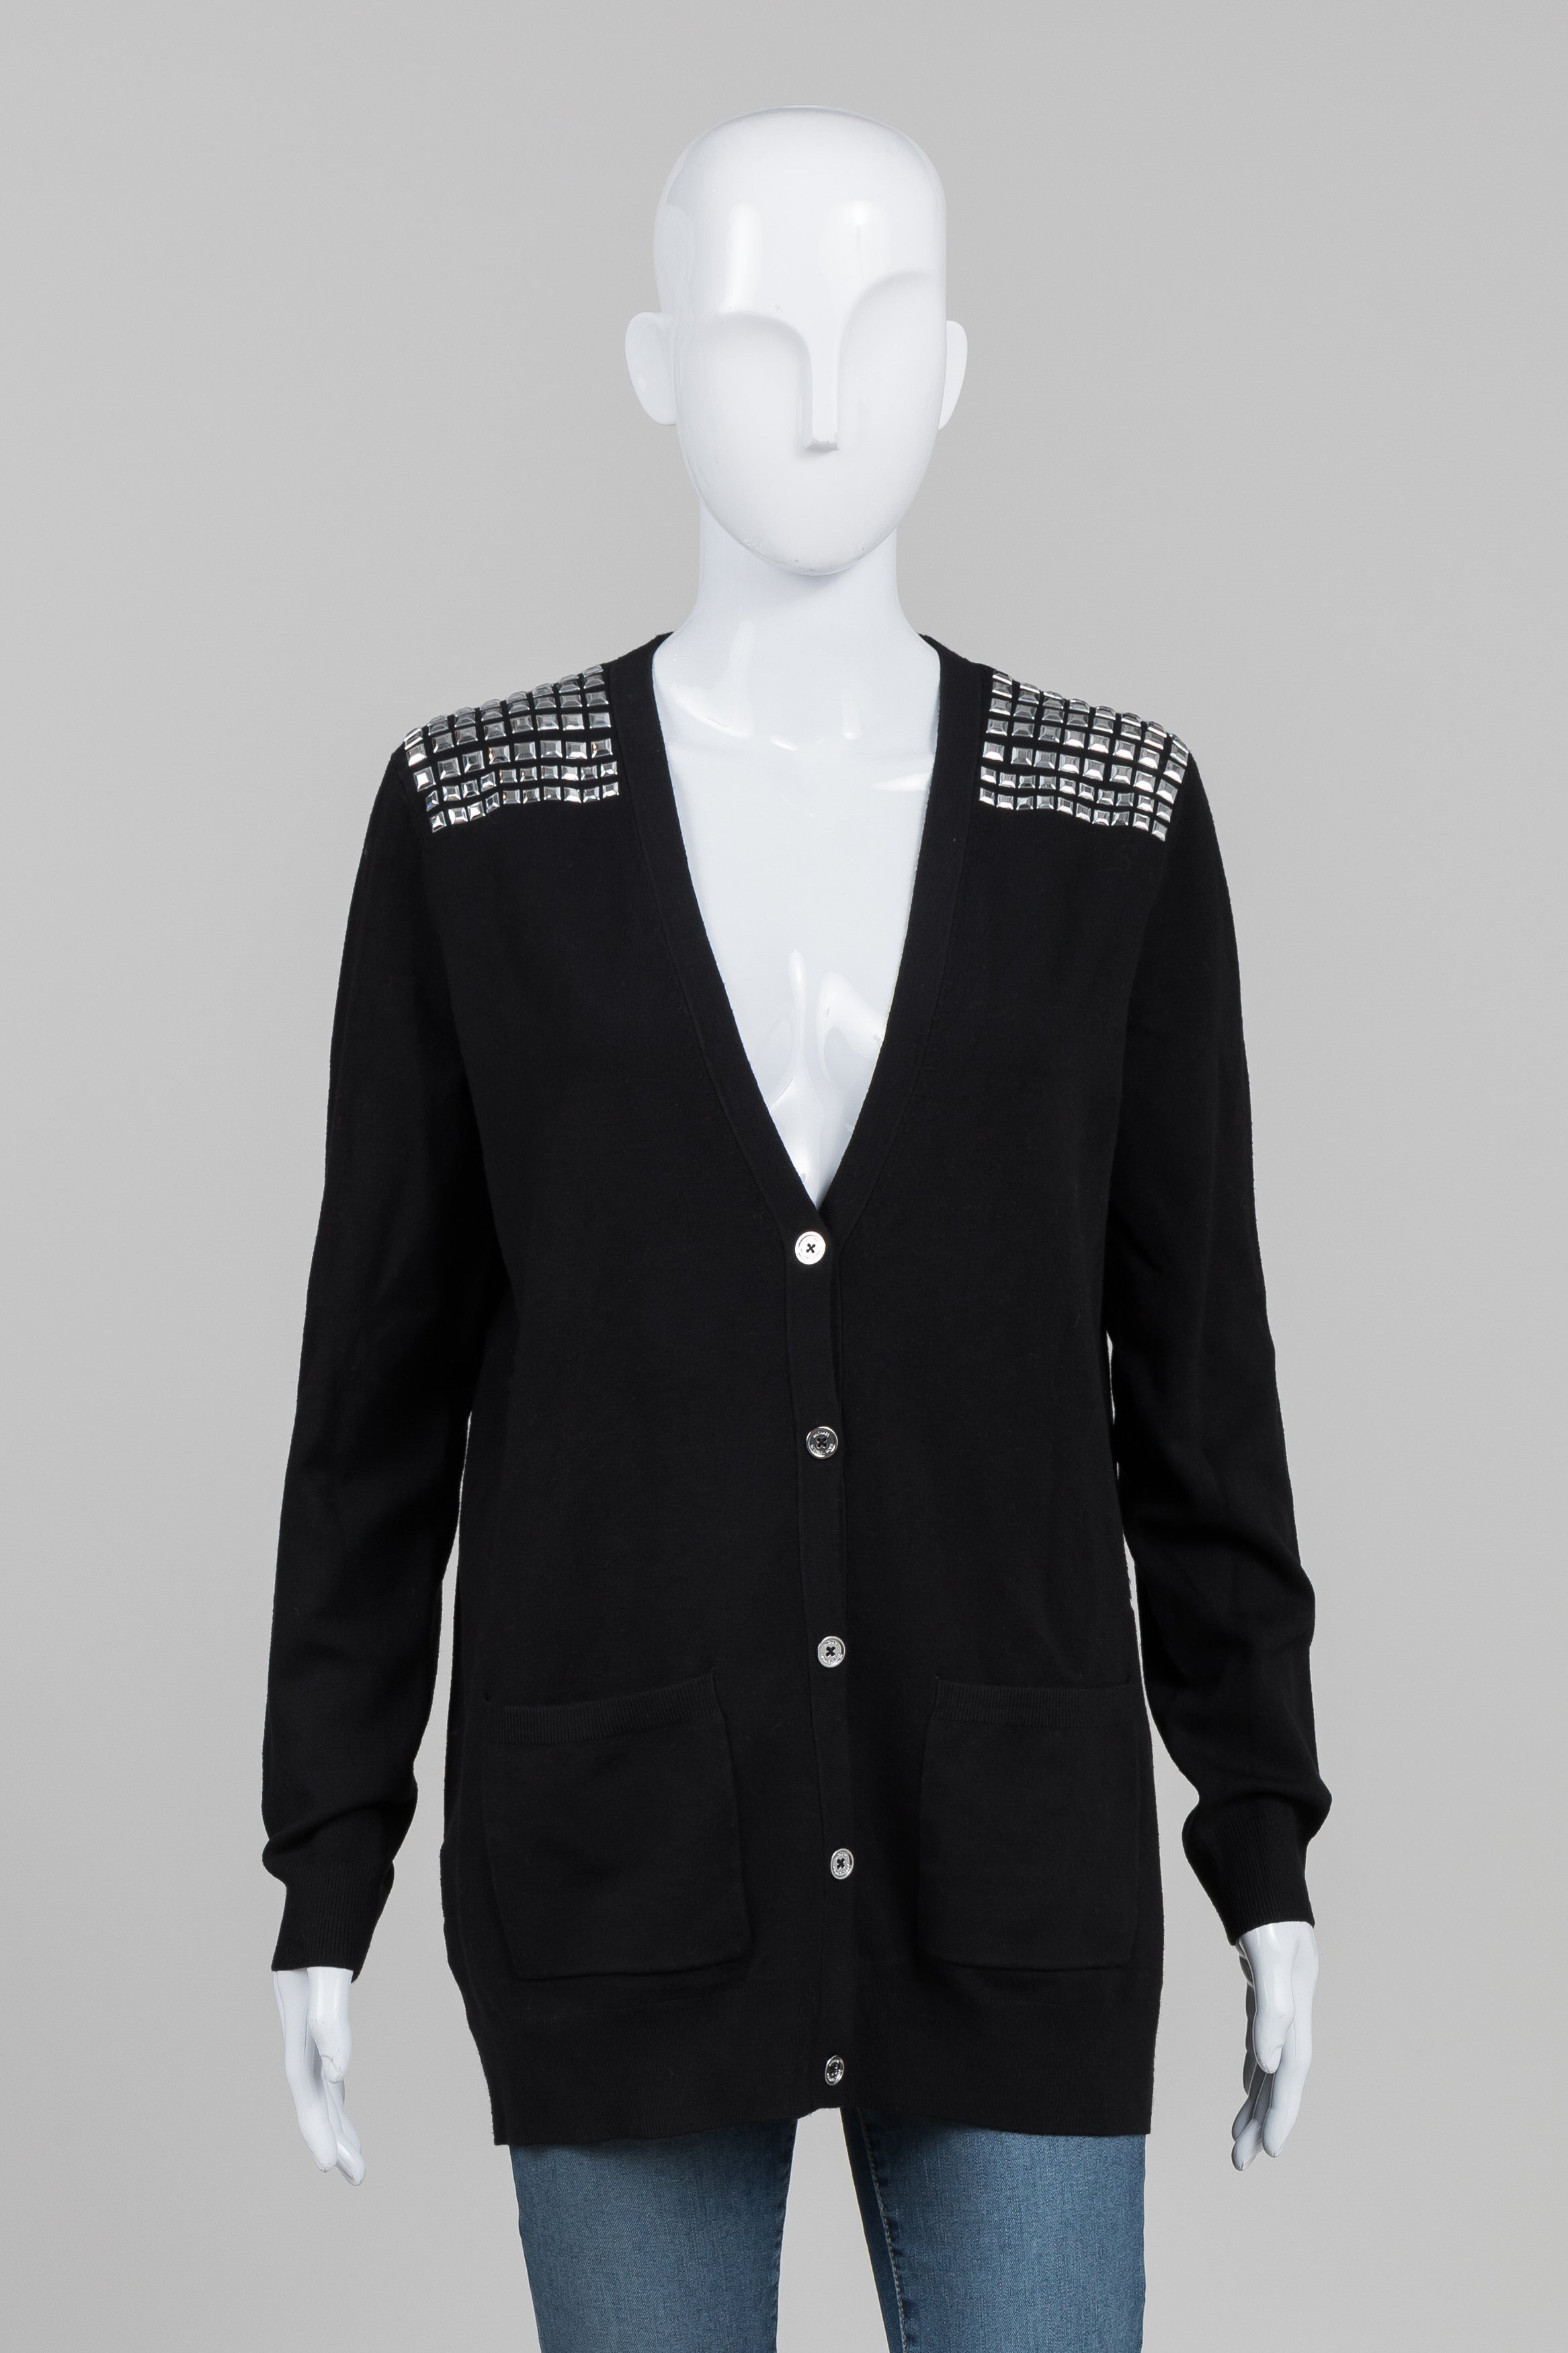 Michael Michael Kors Black Doubleknit Cardigan w/ Silver Studded Shoulders (M)